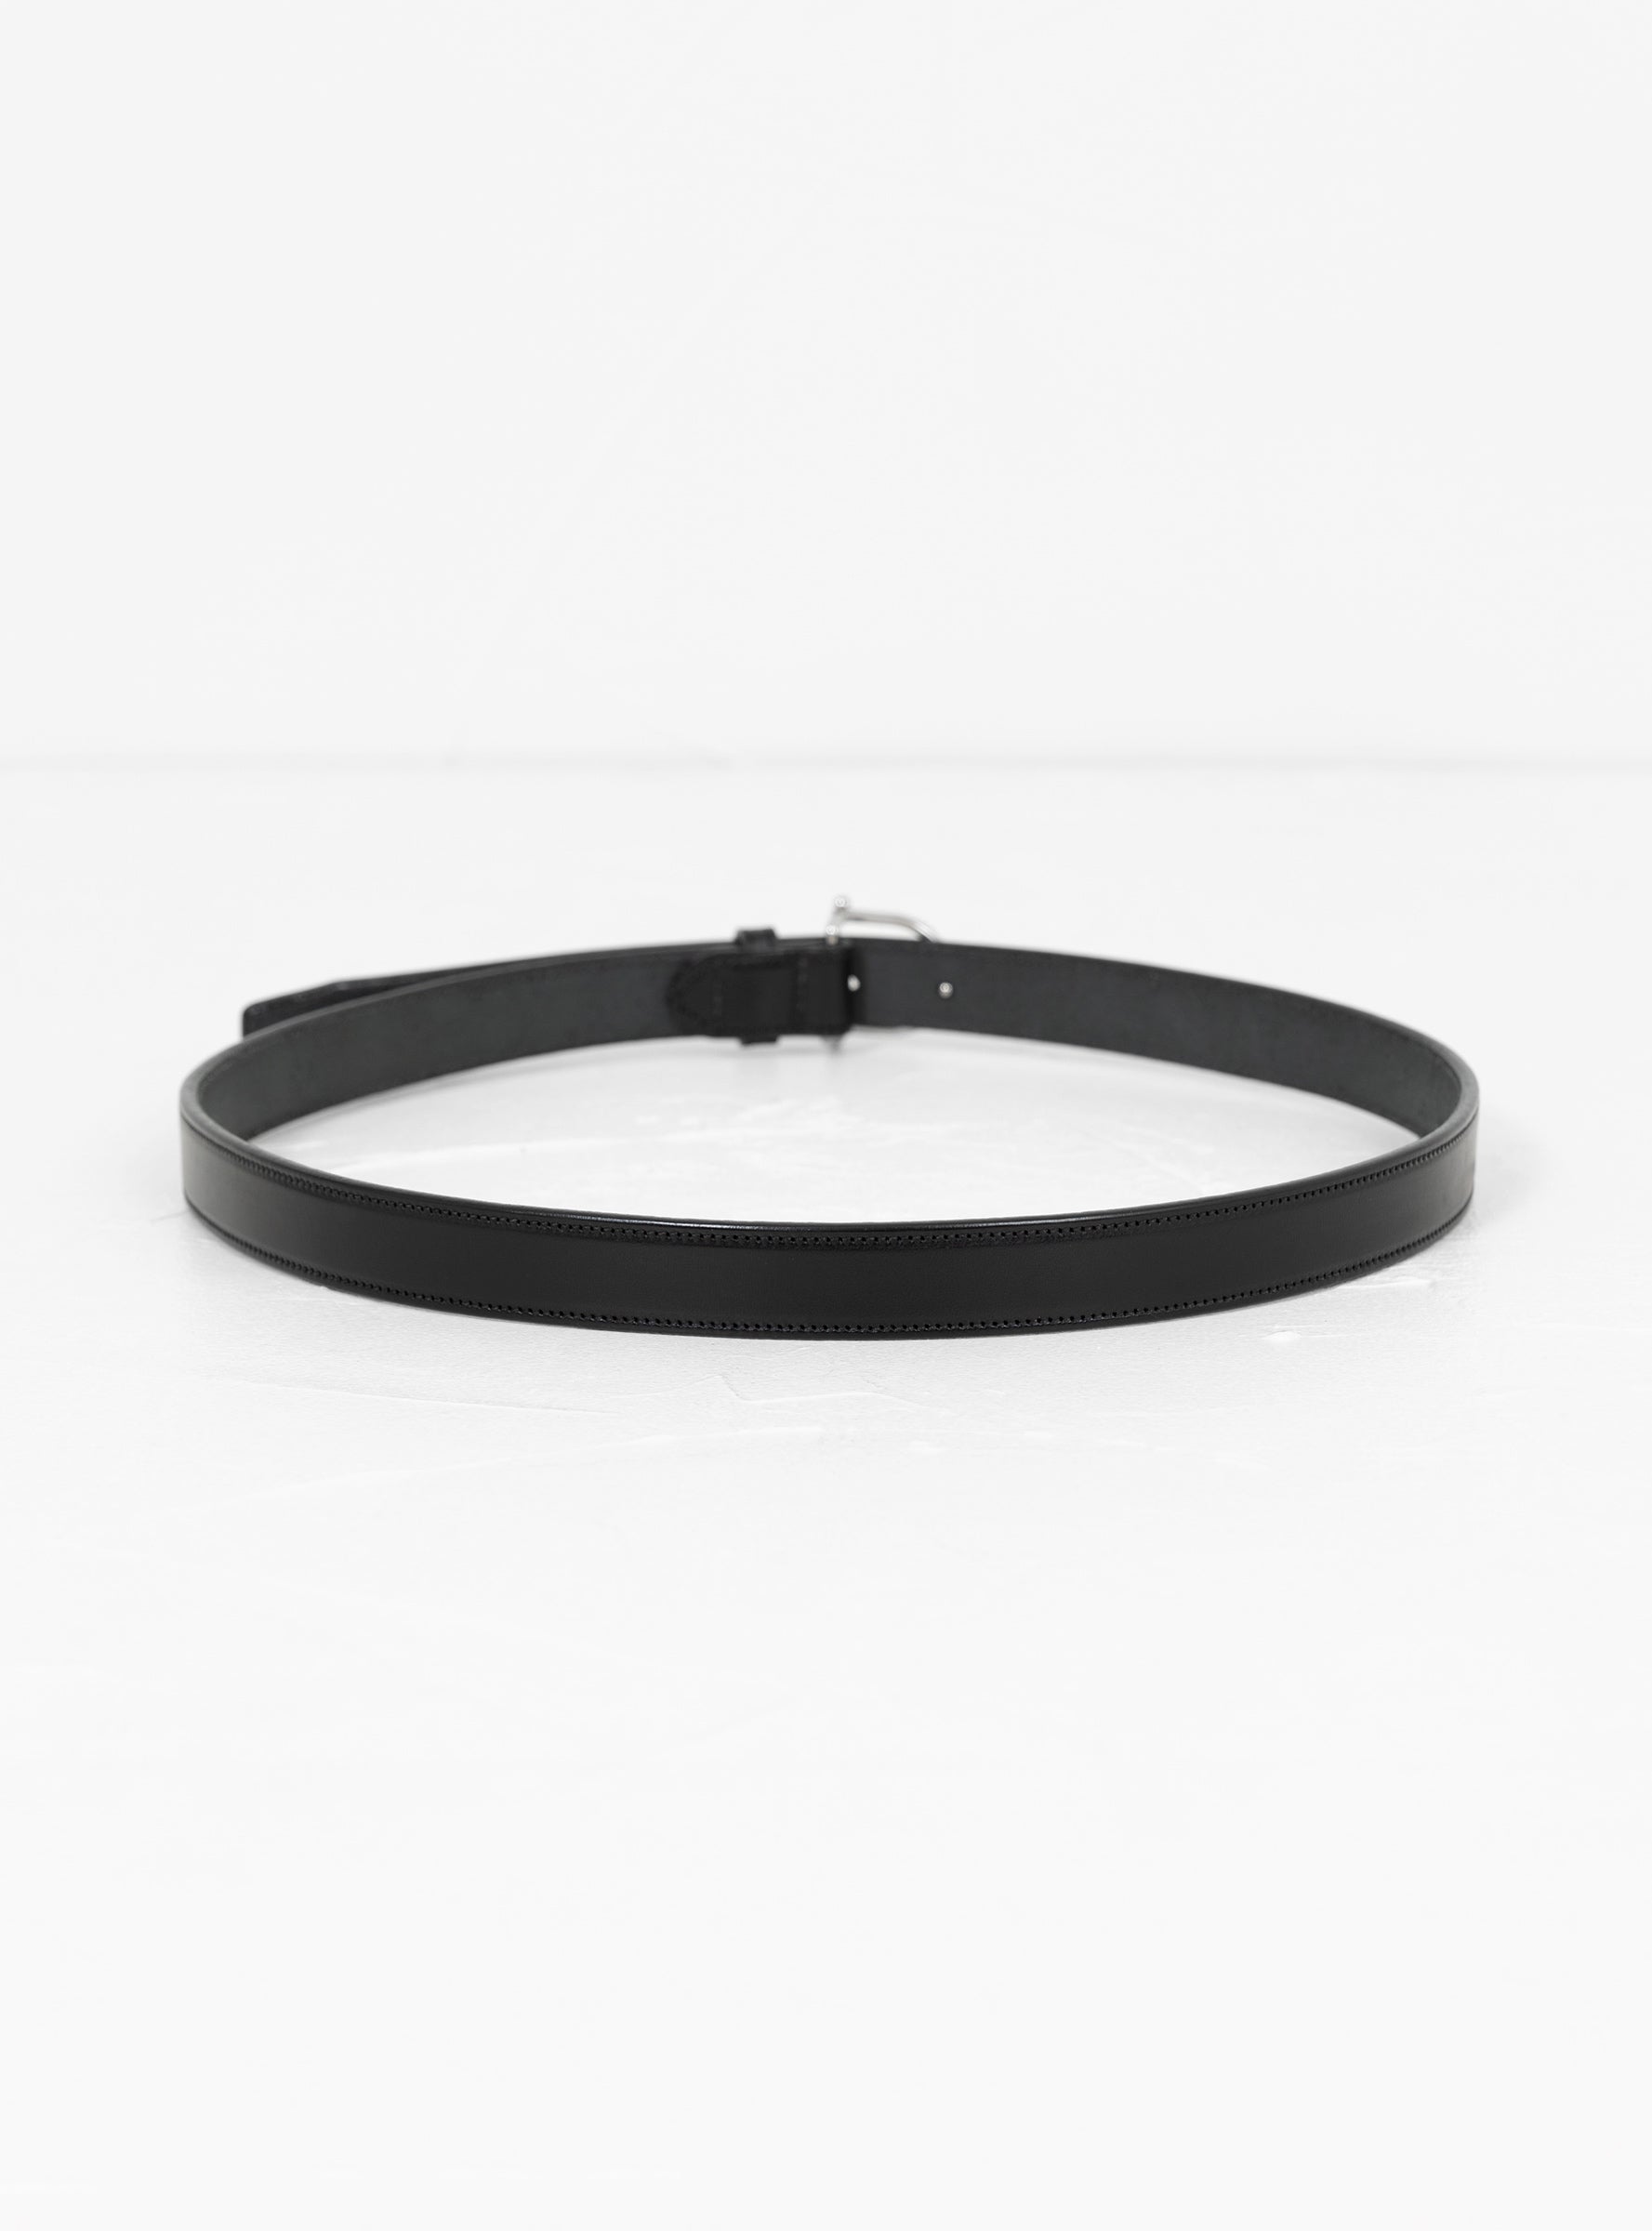  Tory Leather Spur Belt Black & Nickel - XS